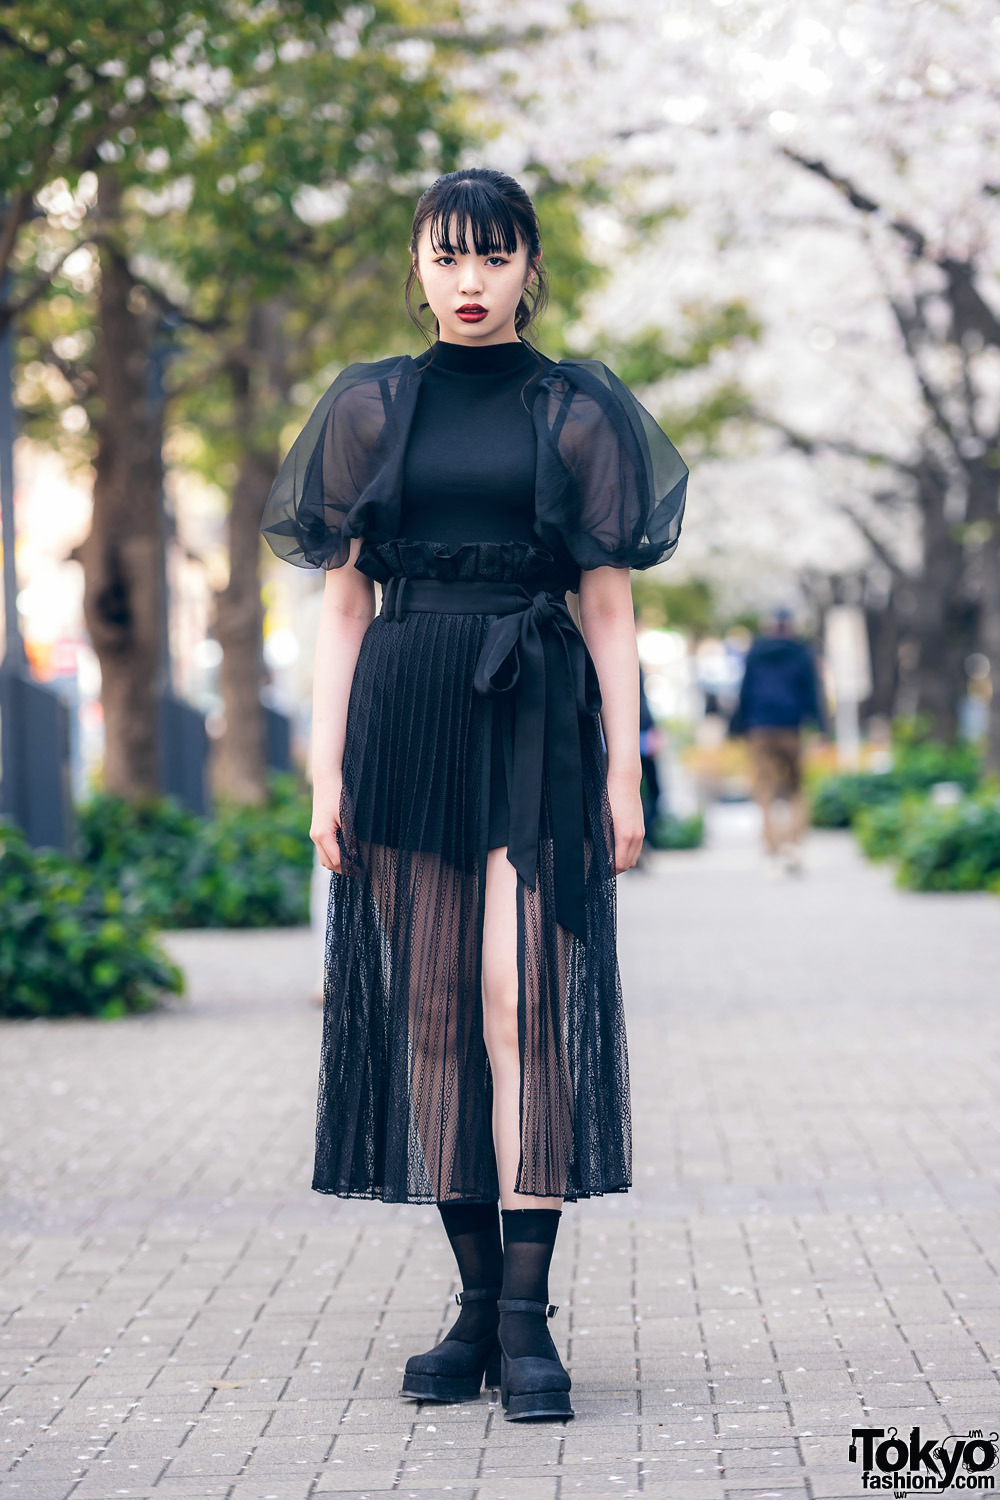 tokyo-fashion:  18-year-old Japanese model Mashiro on the street in Tokyo wearing